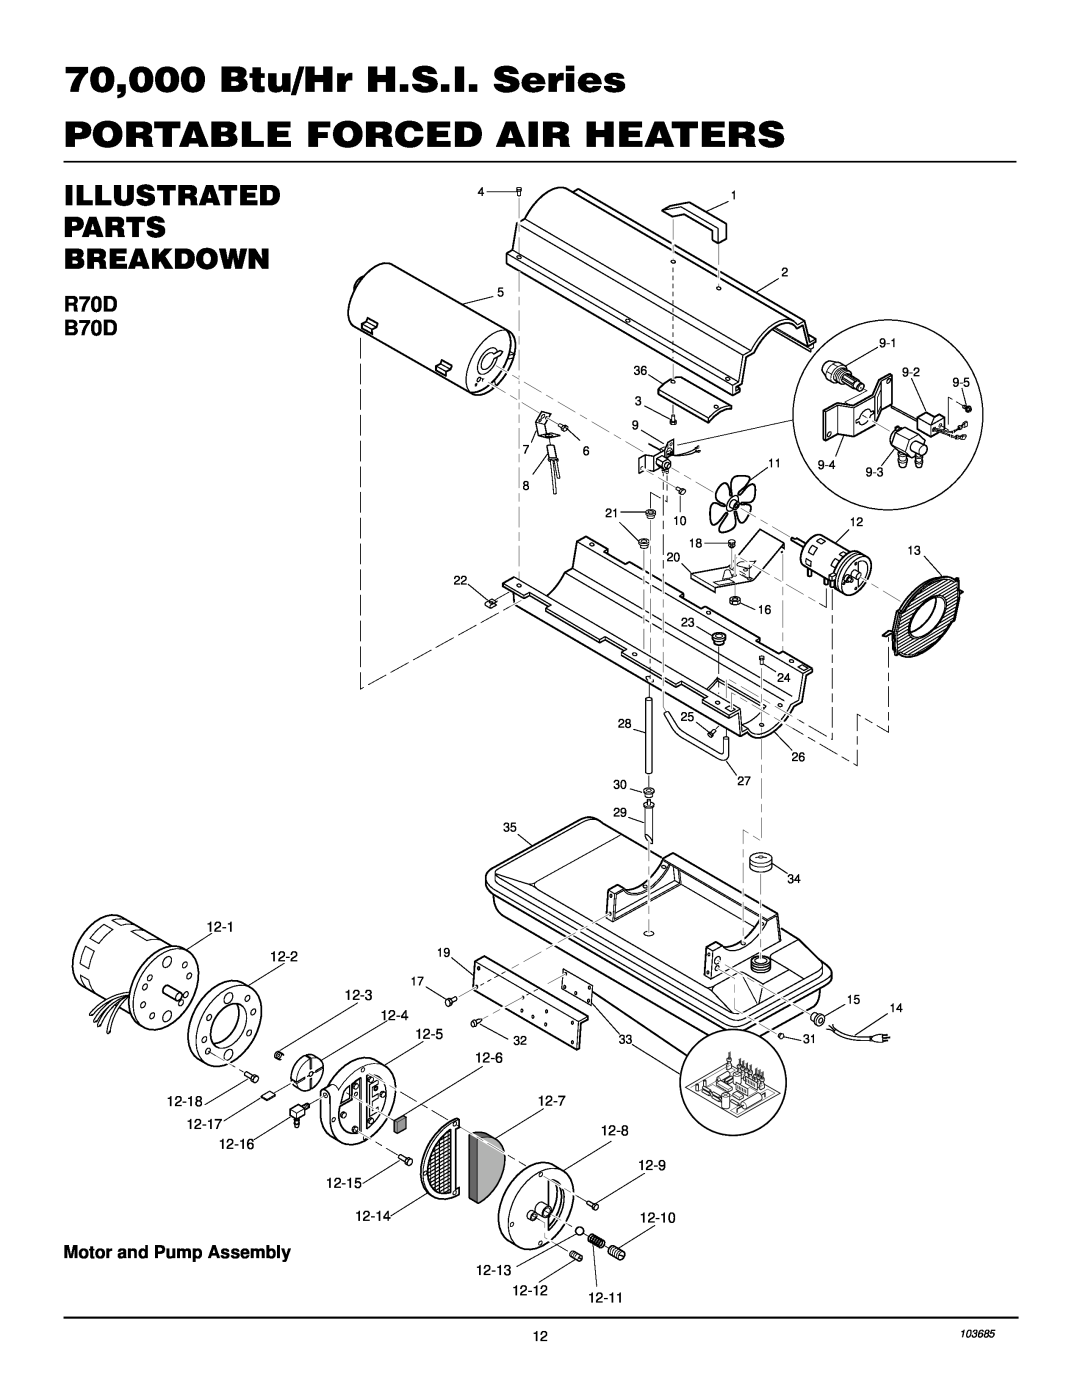 Desa owner manual Illustrated Parts Breakdown, R70D B70D, Motor and Pump Assembly, 70,000 Btu/Hr H.S.I. Series 